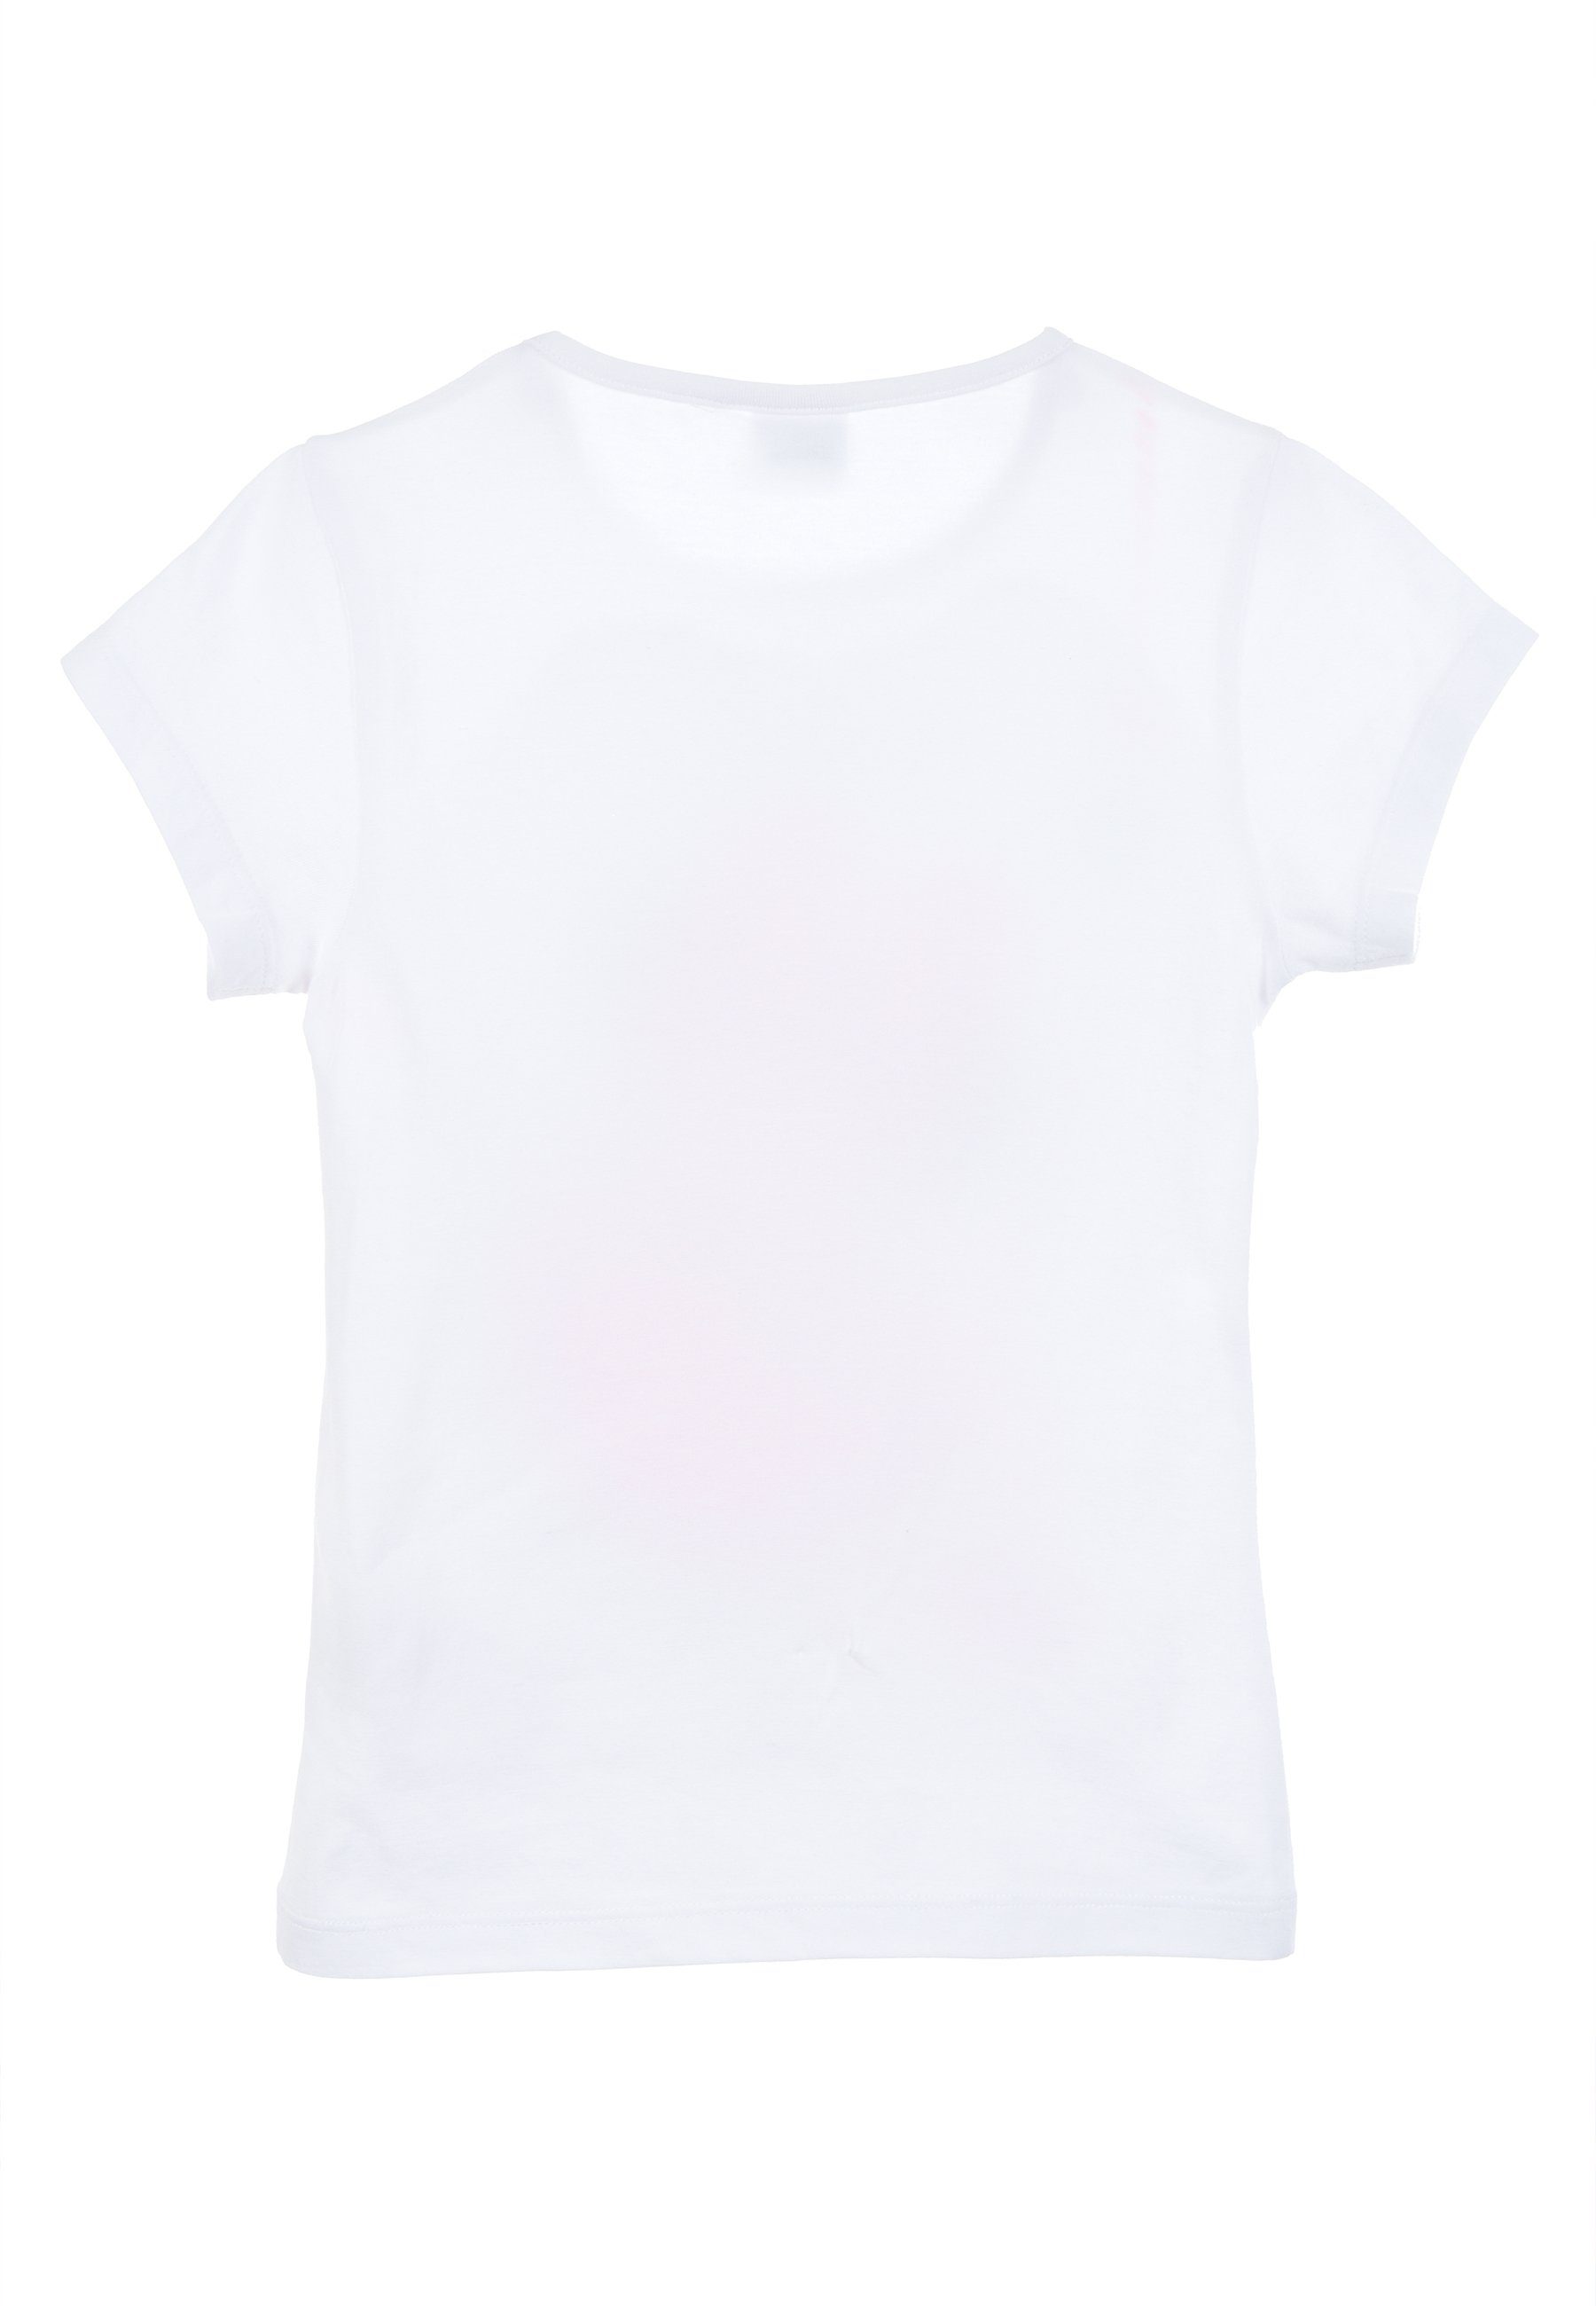 Sommer Kinder T-Shirt Oberteil Disney Mädchen Weiß Mouse Minnie Kurzarm-Shirt